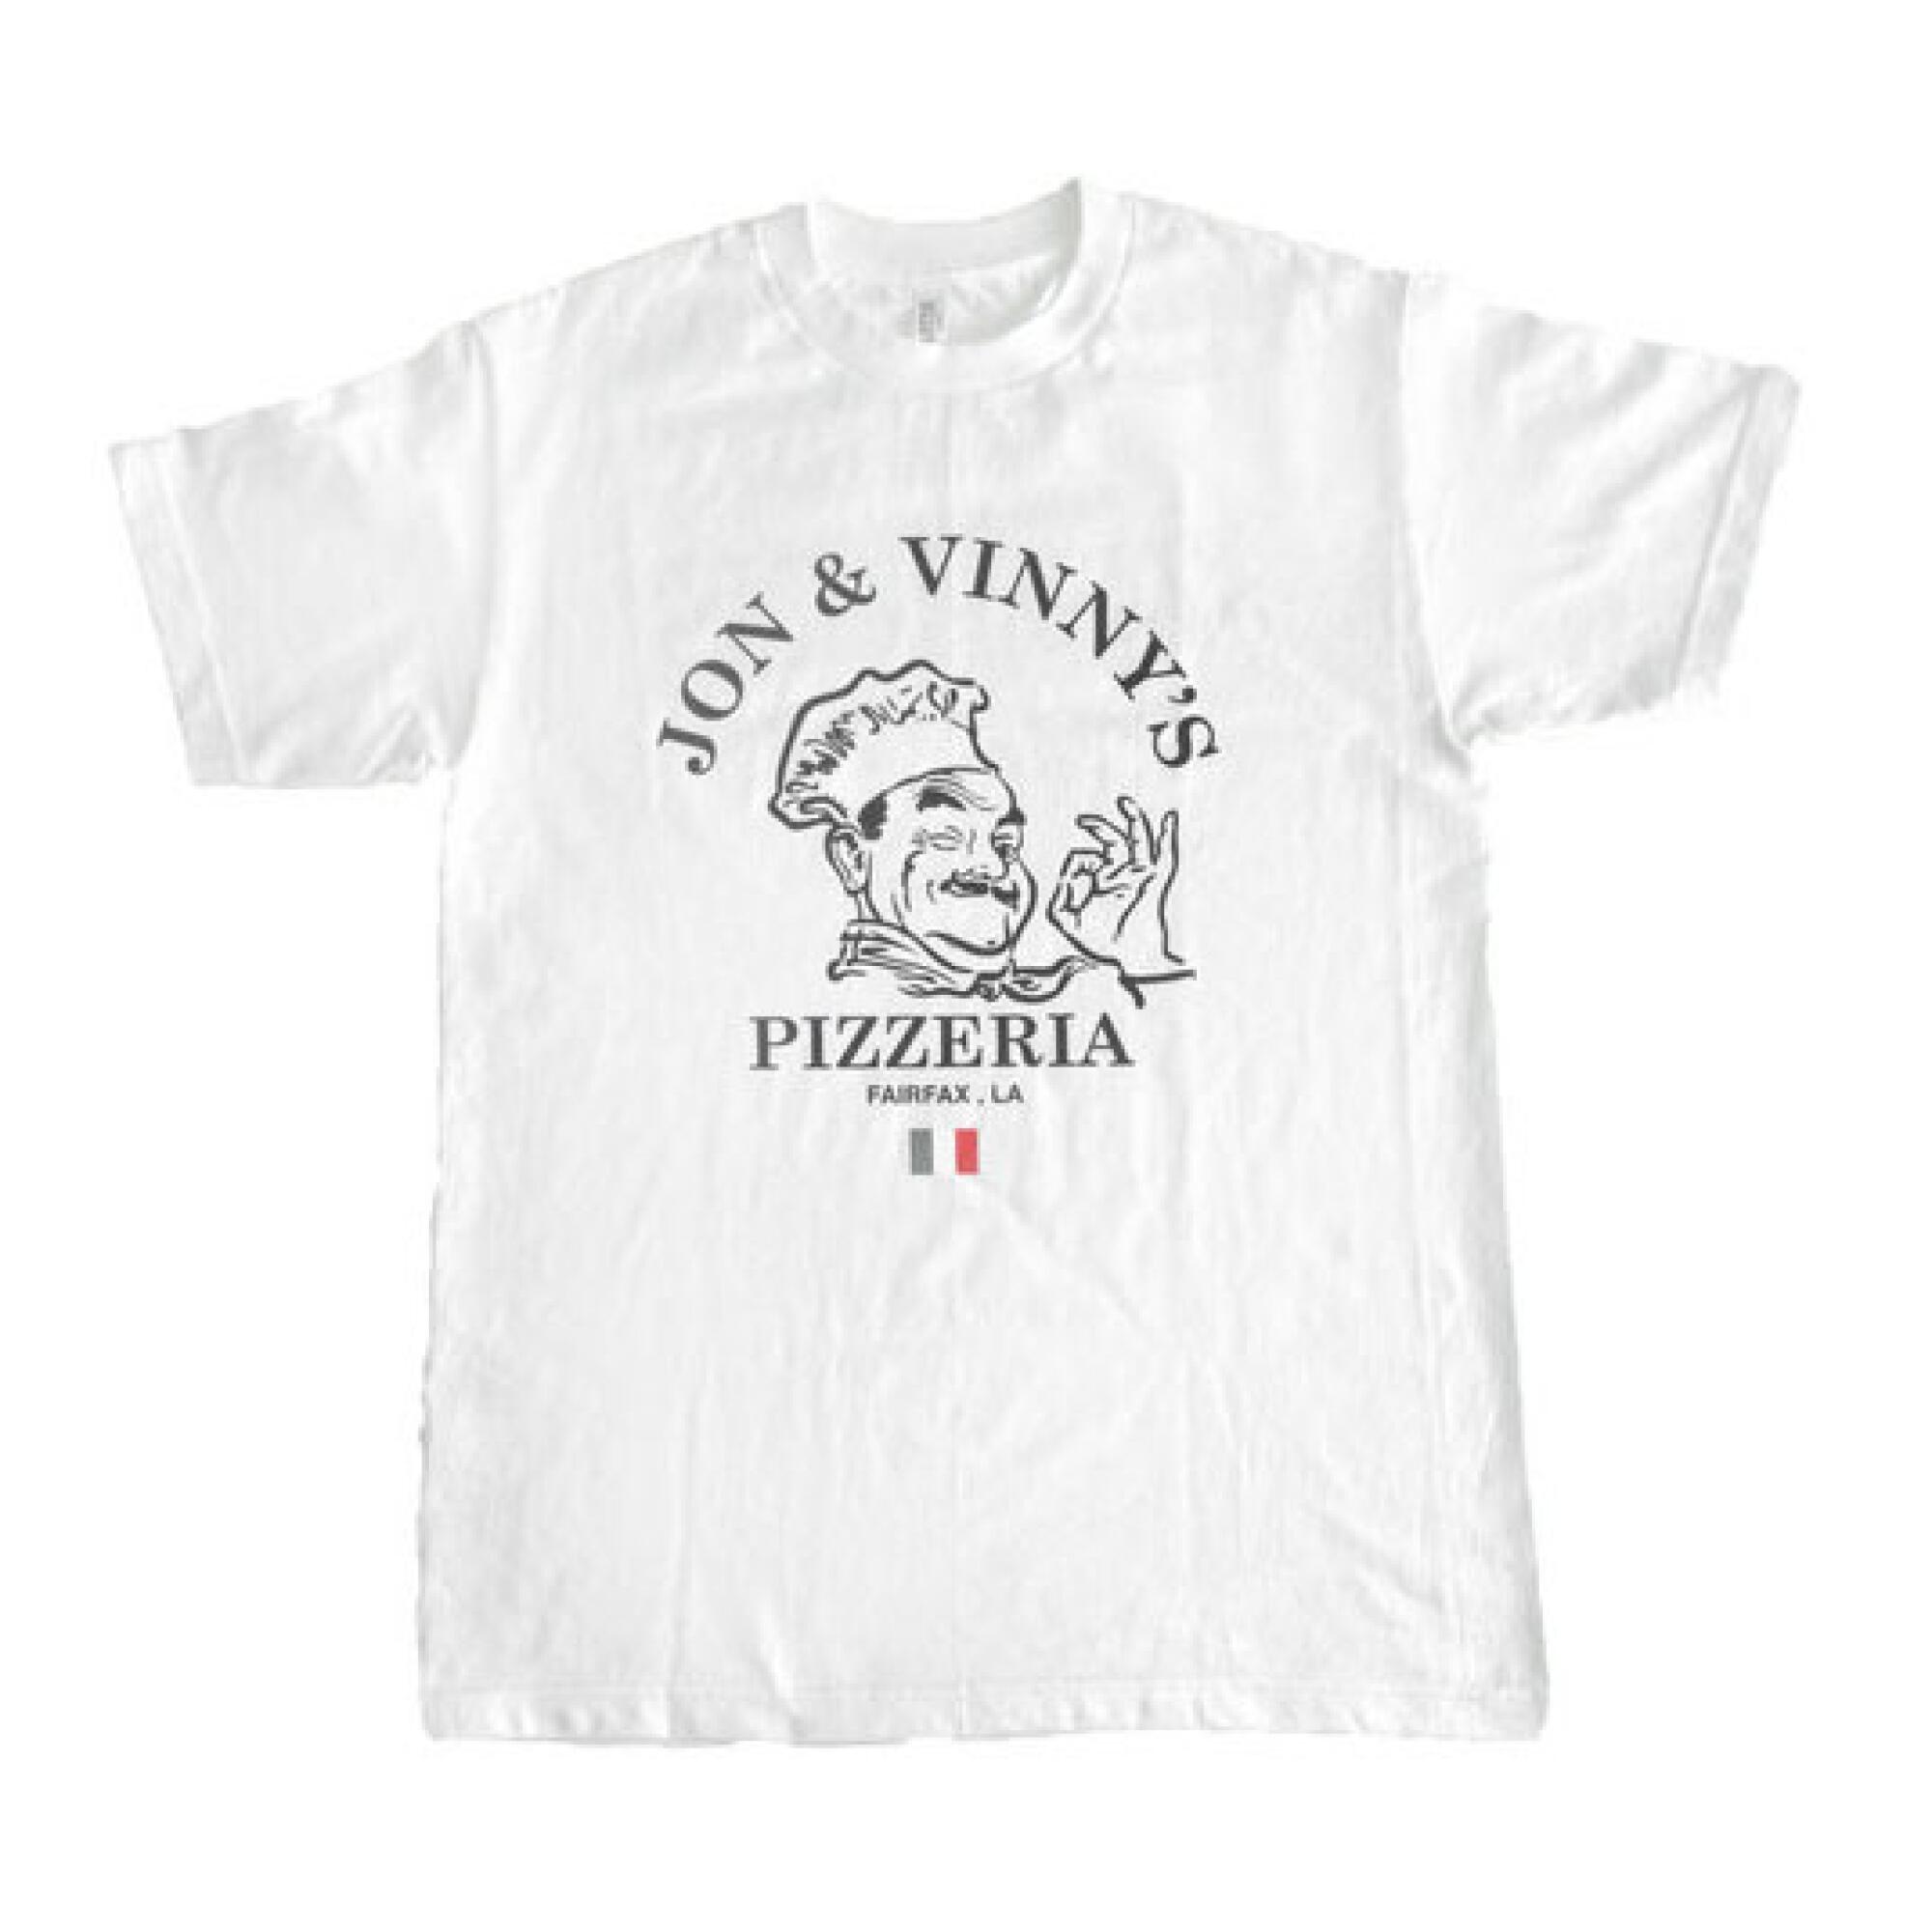 Camiseta OG Pizza Man Fairfax de Jon & Vinny’s.